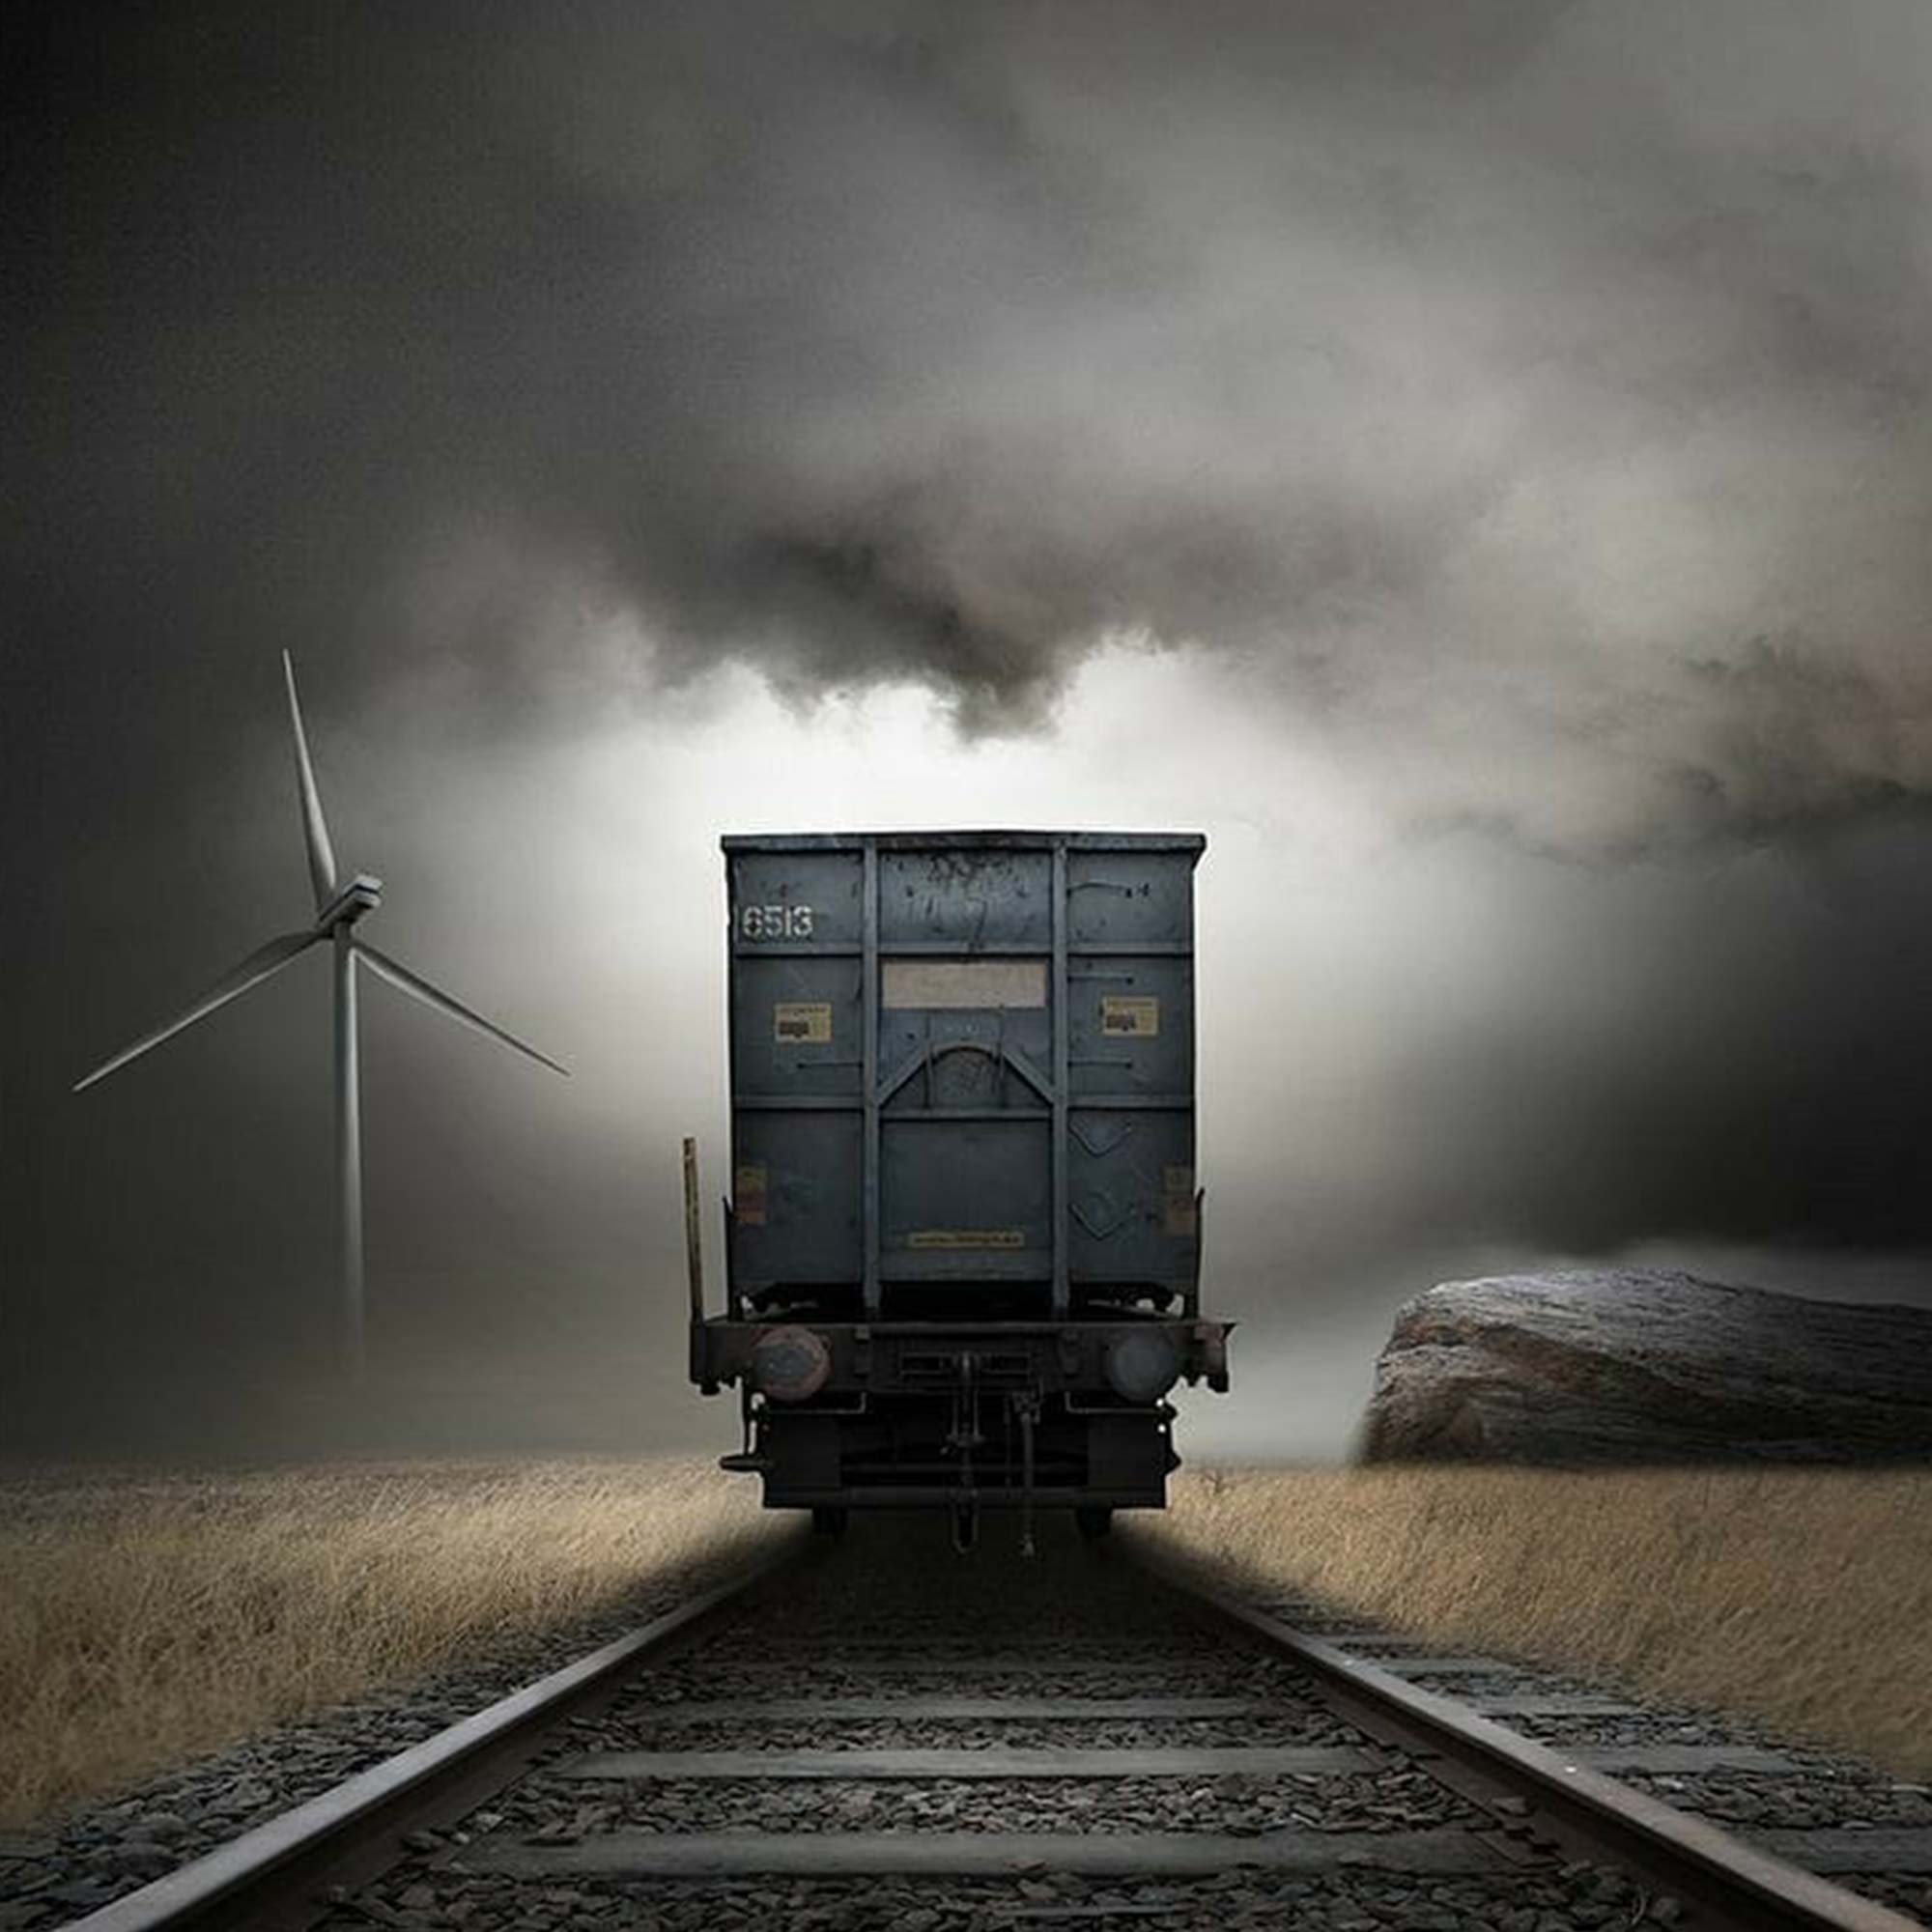 Railroad Hopper PicsArt Background Free Stock Image